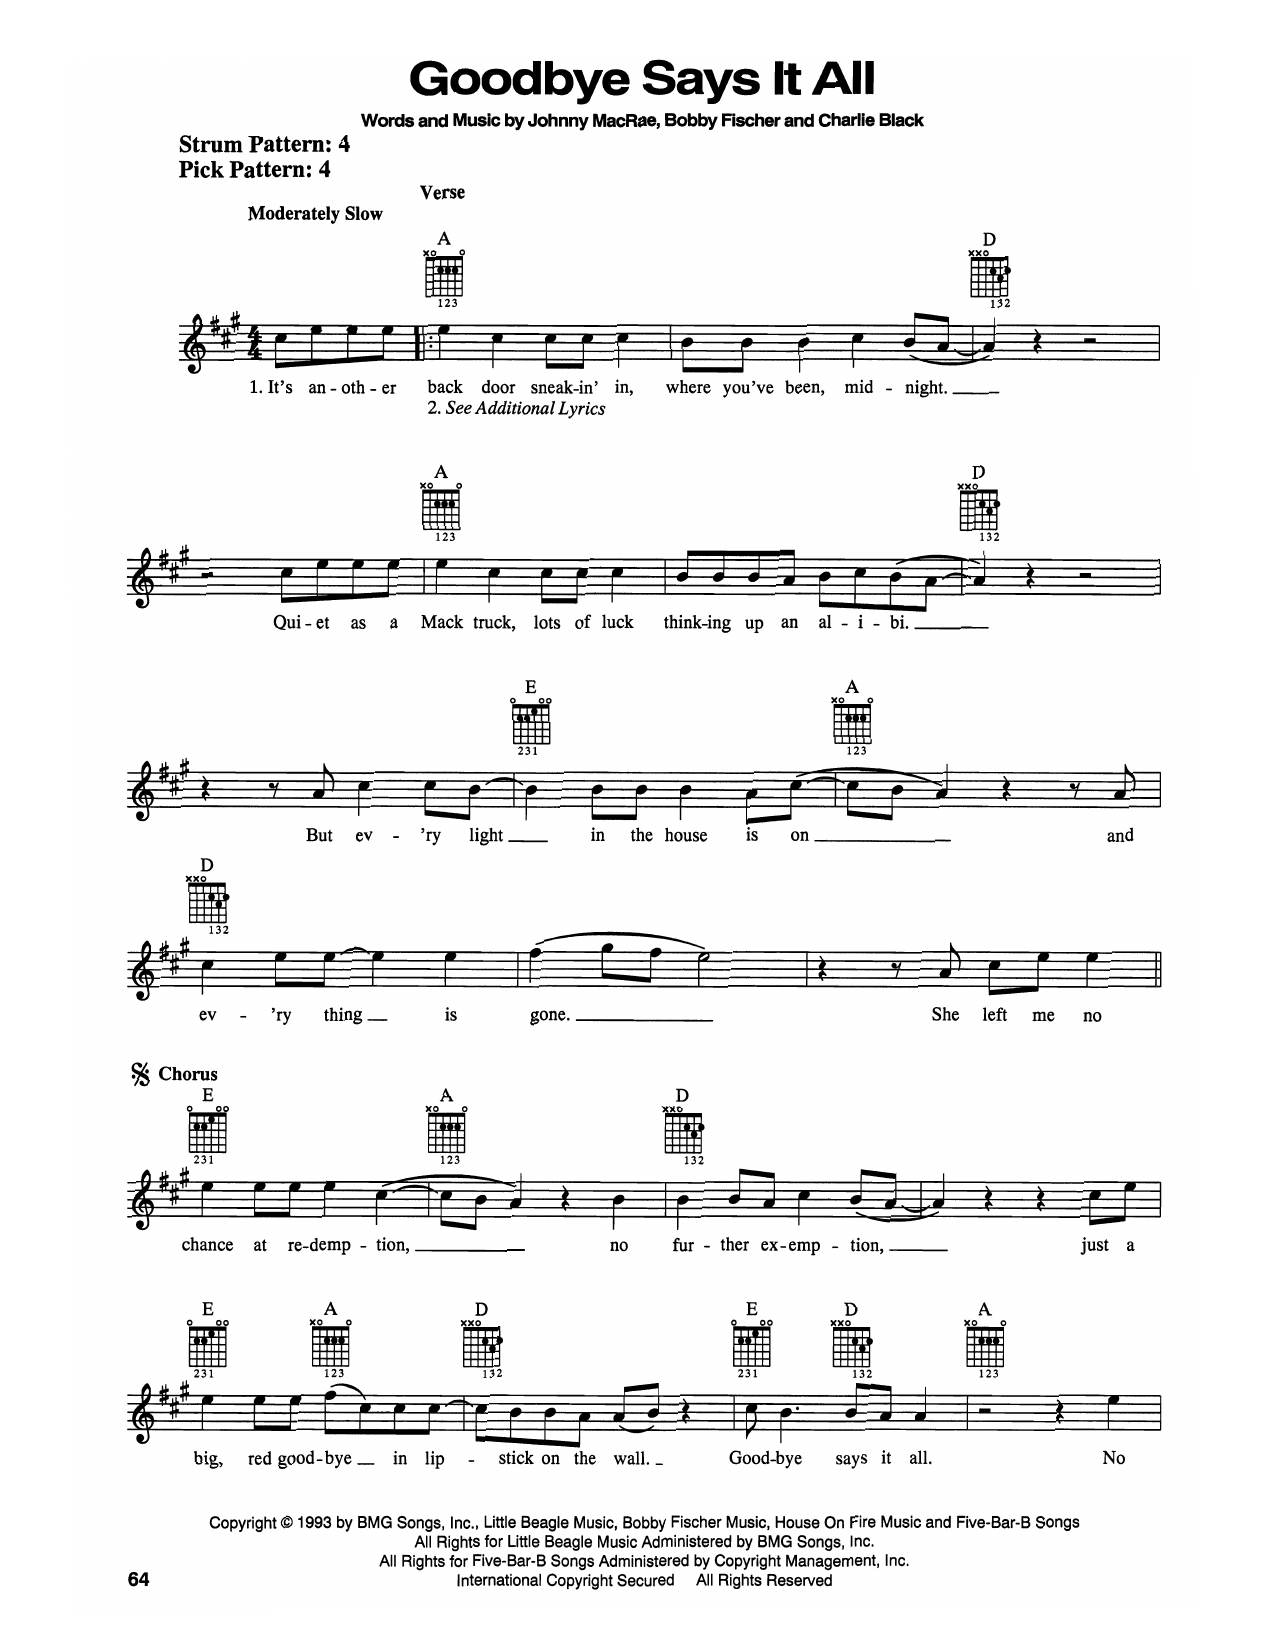 Blackhawk Goodbye Says It All sheet music notes printable PDF score